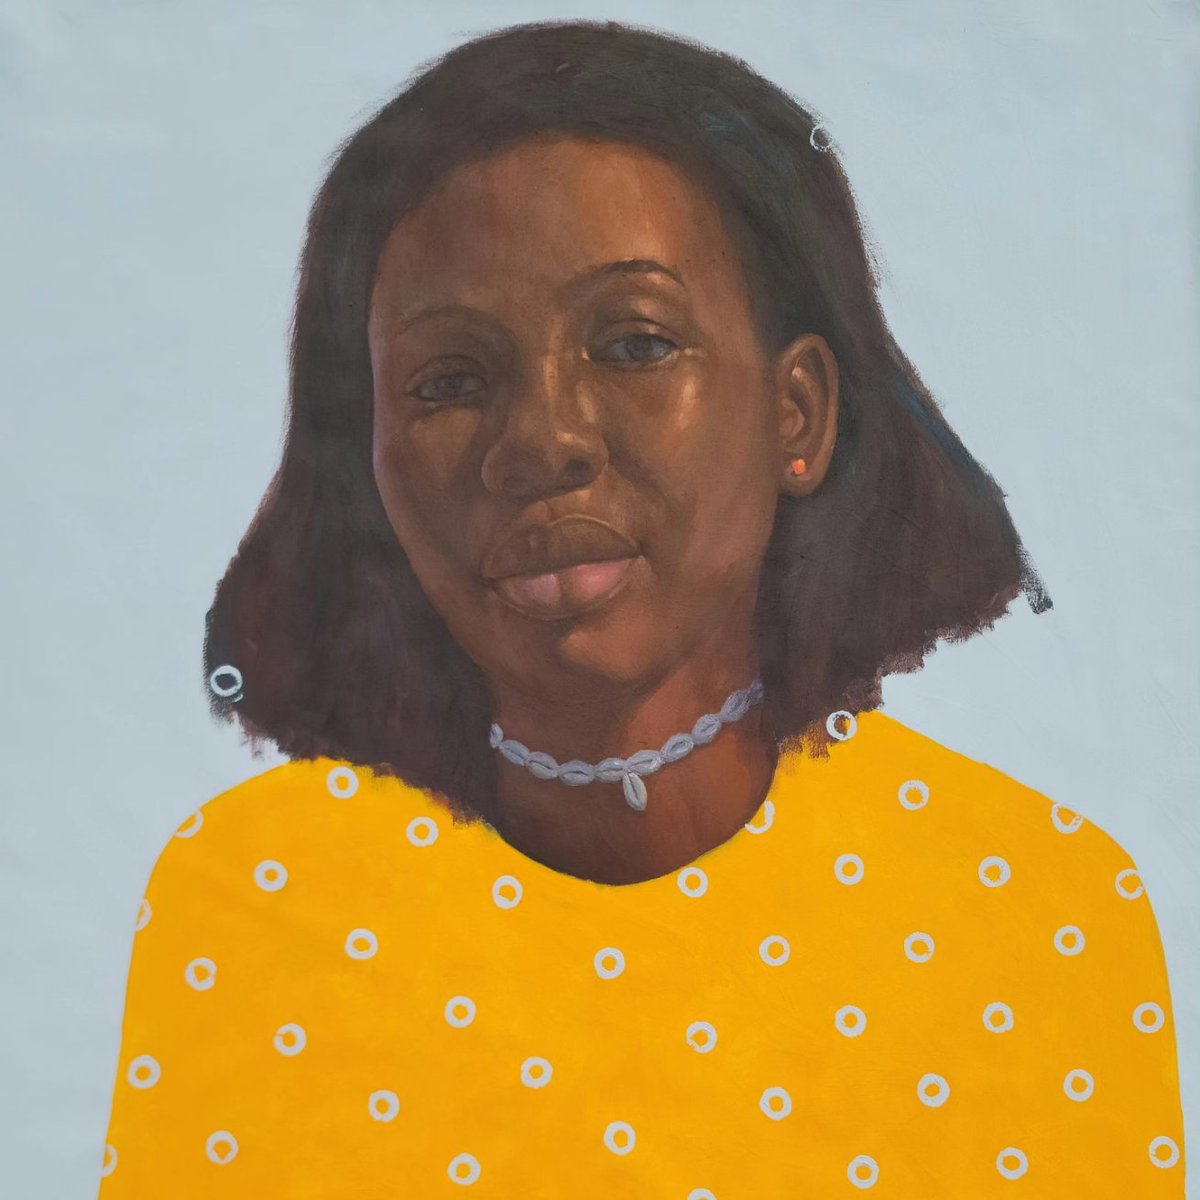 Omolàbáké - The woman from my hometown.
Oil and acrylic on canvas
121.9 x 121.9cm
#contemporaryart #contemporaryartist #africanart #oilpainting #acrylicpainting #NFTs #NFTdrop #NFTartist #mutedcolors #damilolailori